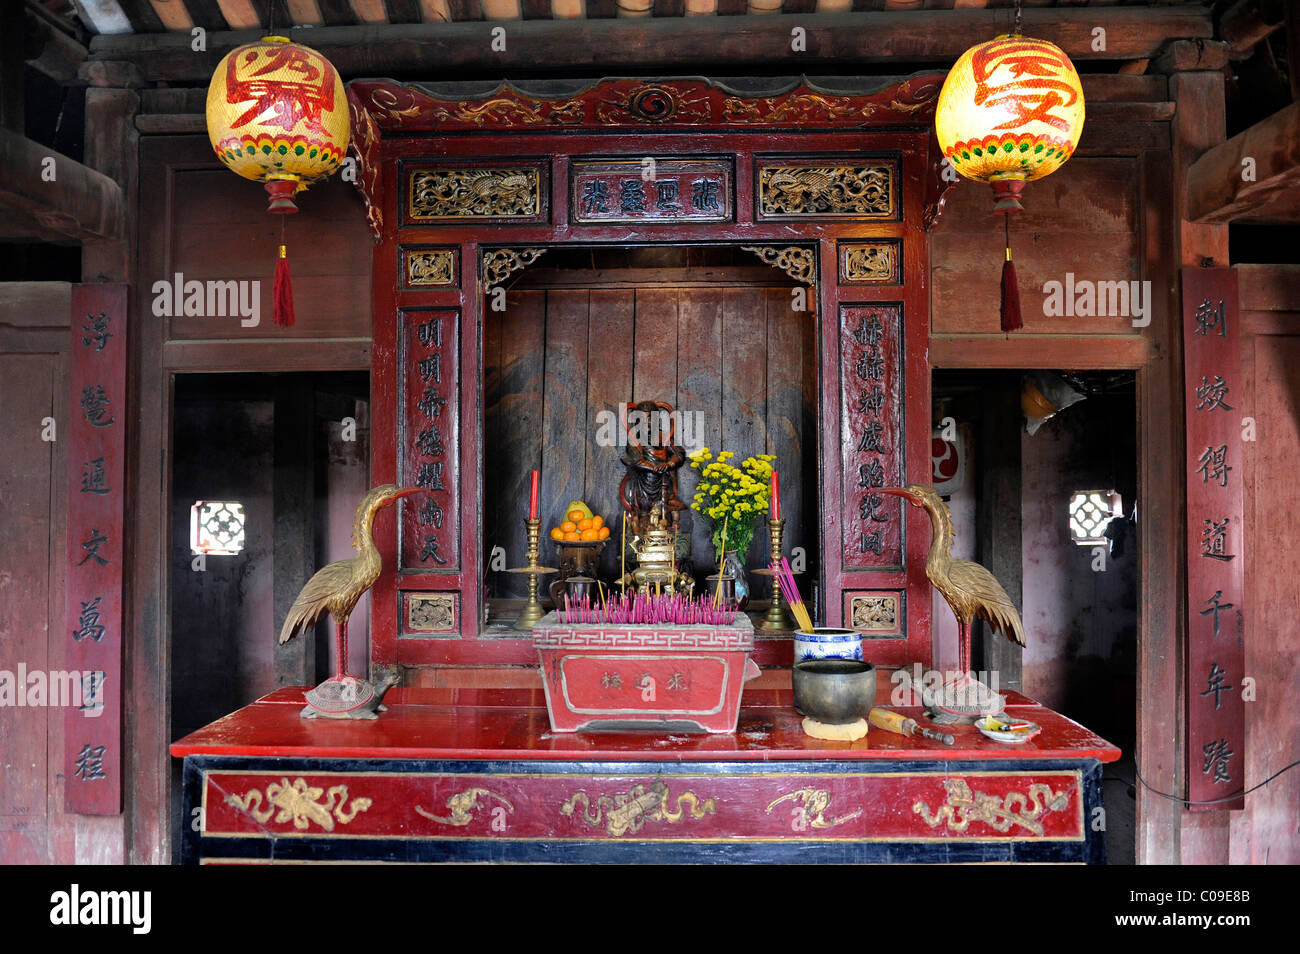 Altar in the interior of the Japanese bridge Chua Cau, Hoi An, Quang Nam, Central Vietnam, Vietnam, Southeast Asia Stock Photo